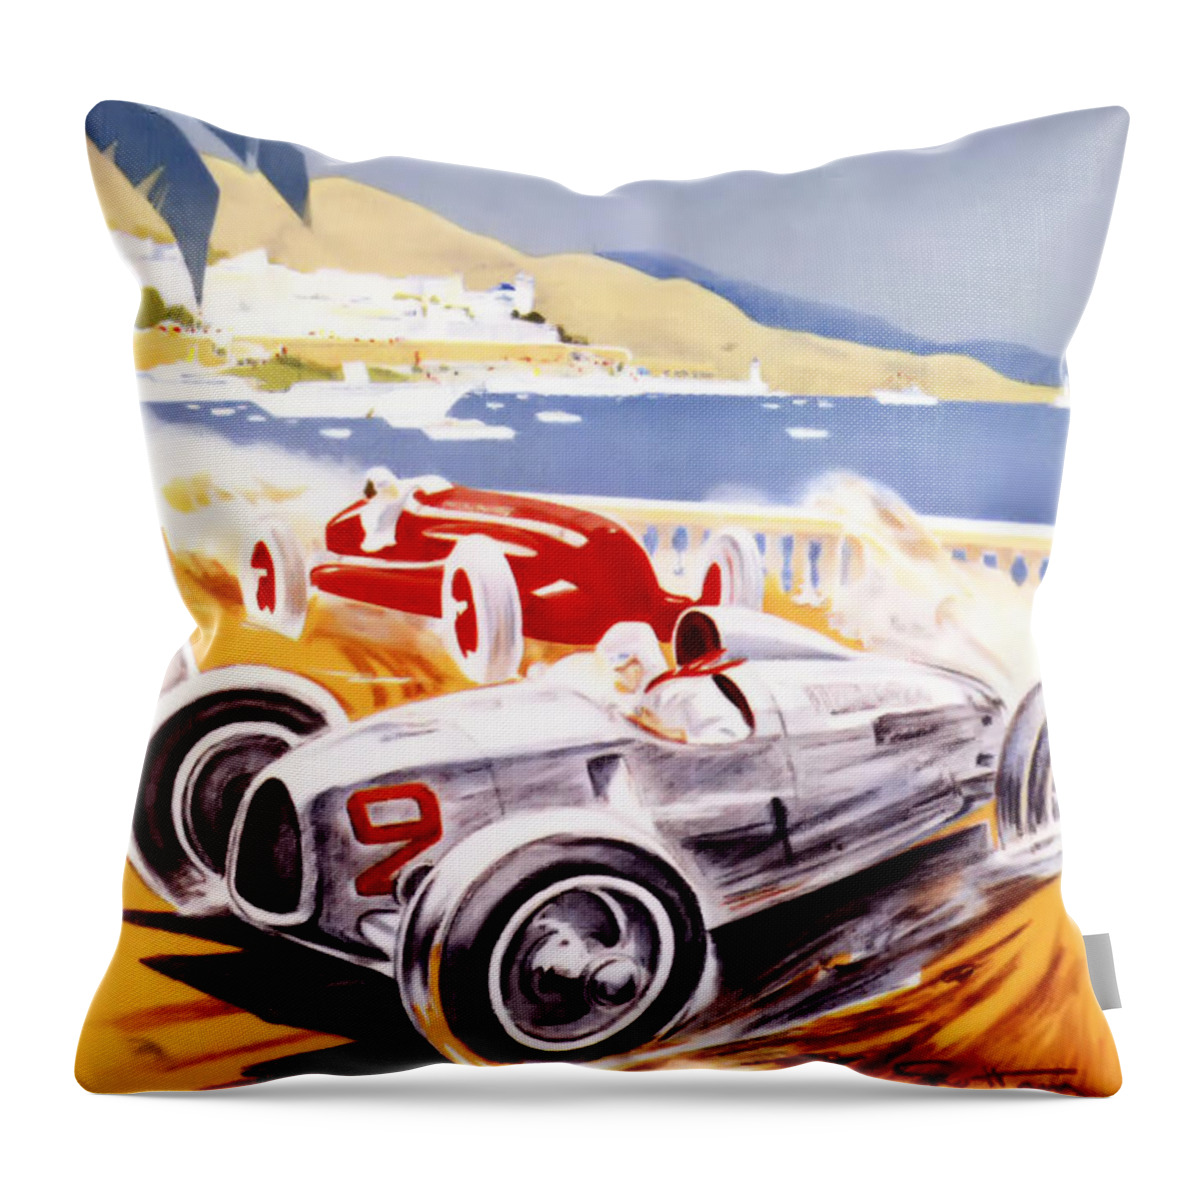 F1 Throw Pillow featuring the digital art 1936 F1 Monaco Grand Prix by Georgia Fowler